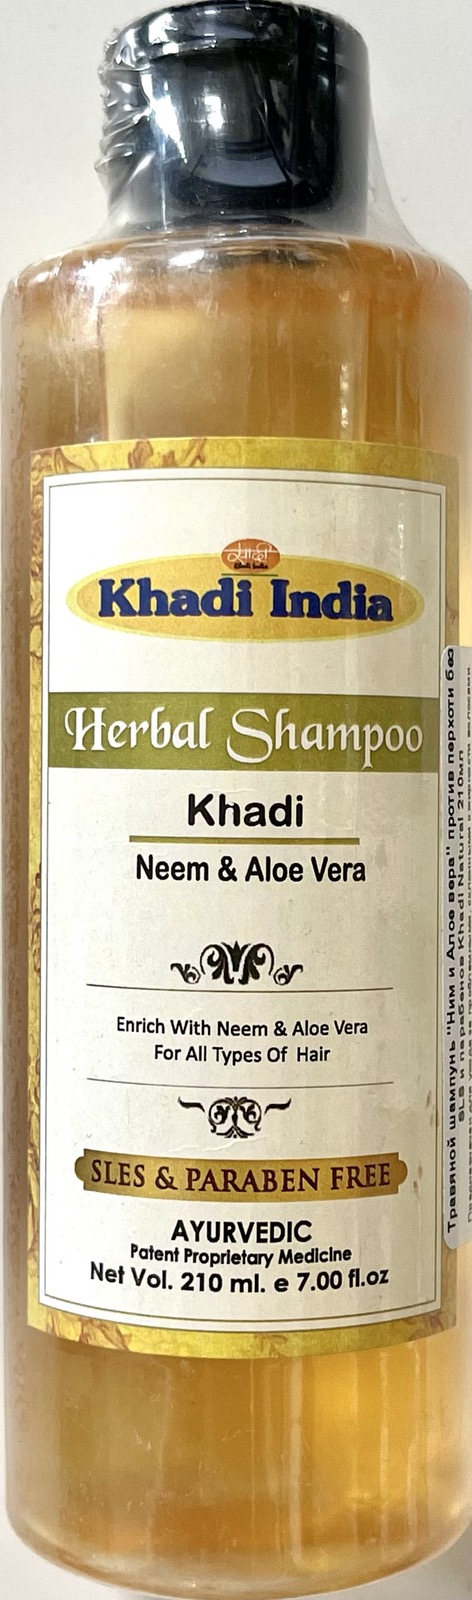 Herbal Shampoo NEEM & ALOE VERA, SLS & PARABEN FREE, Khadi India (Травяной шампунь НИМ И АЛОЭ ВЕРА, БЕЗ СЛС И ПАРАБЕНОВ, Кхади Индия), 210 мл.